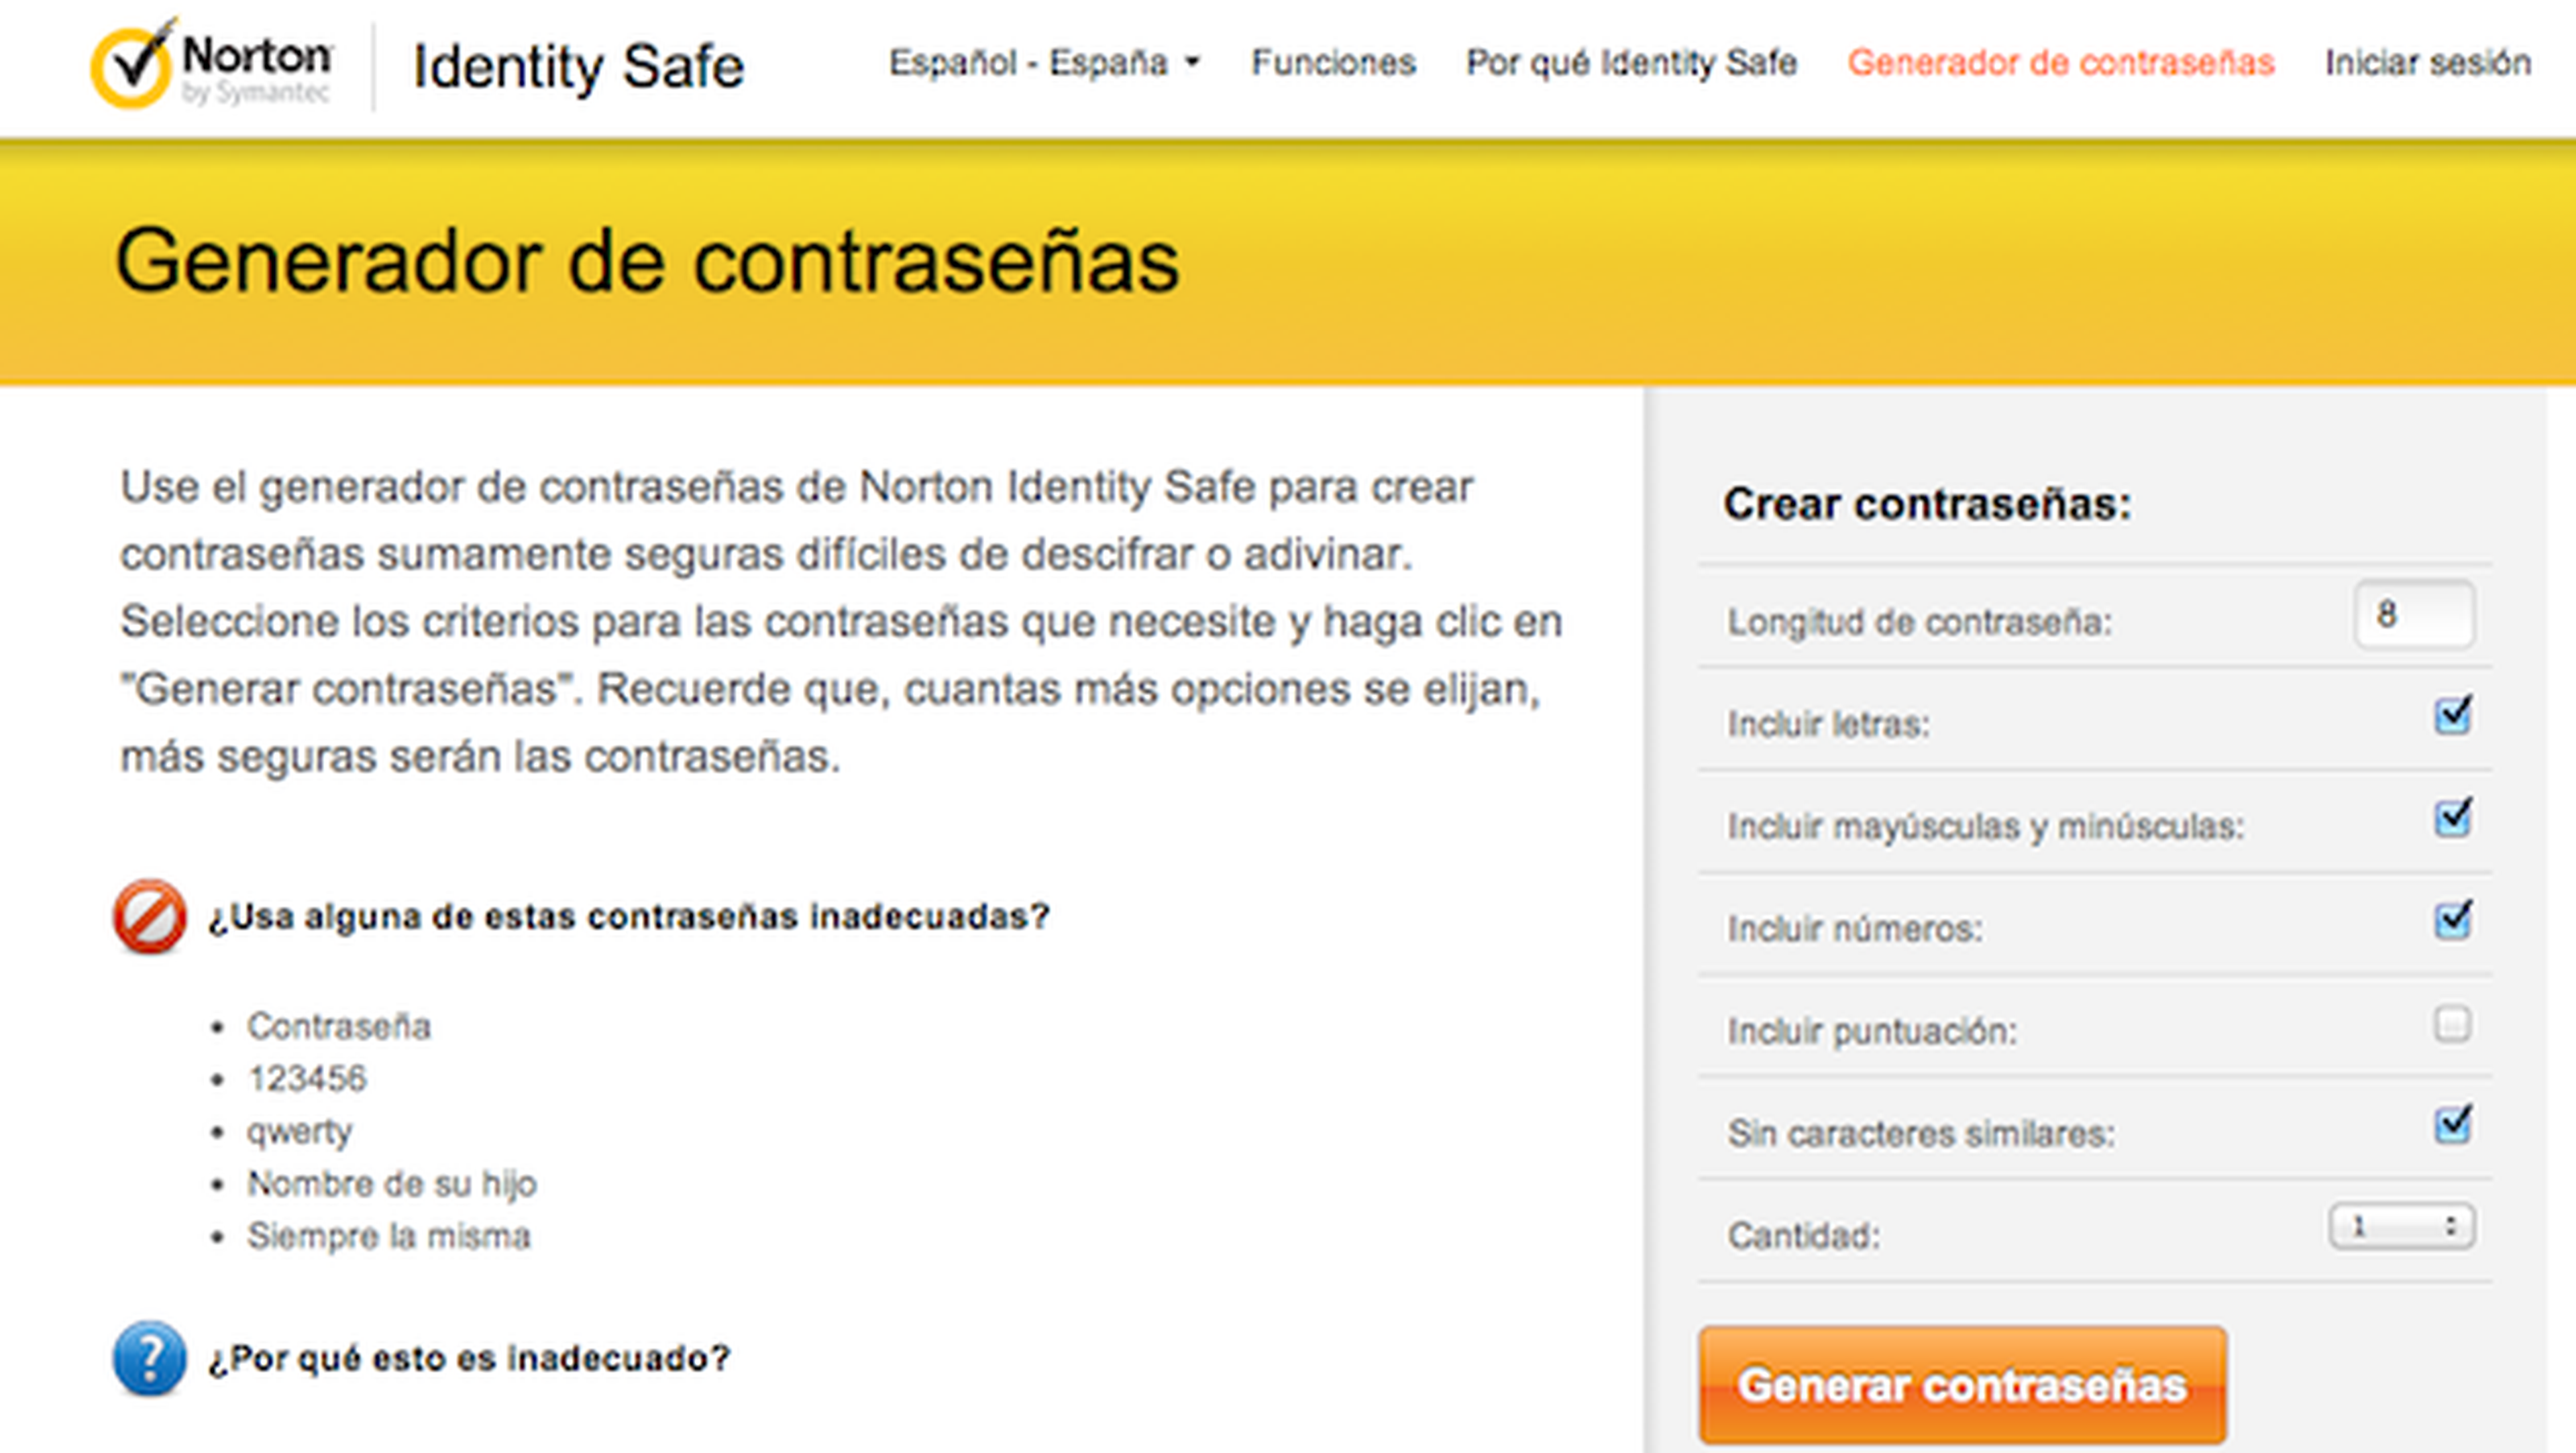 Norton Identity Safe